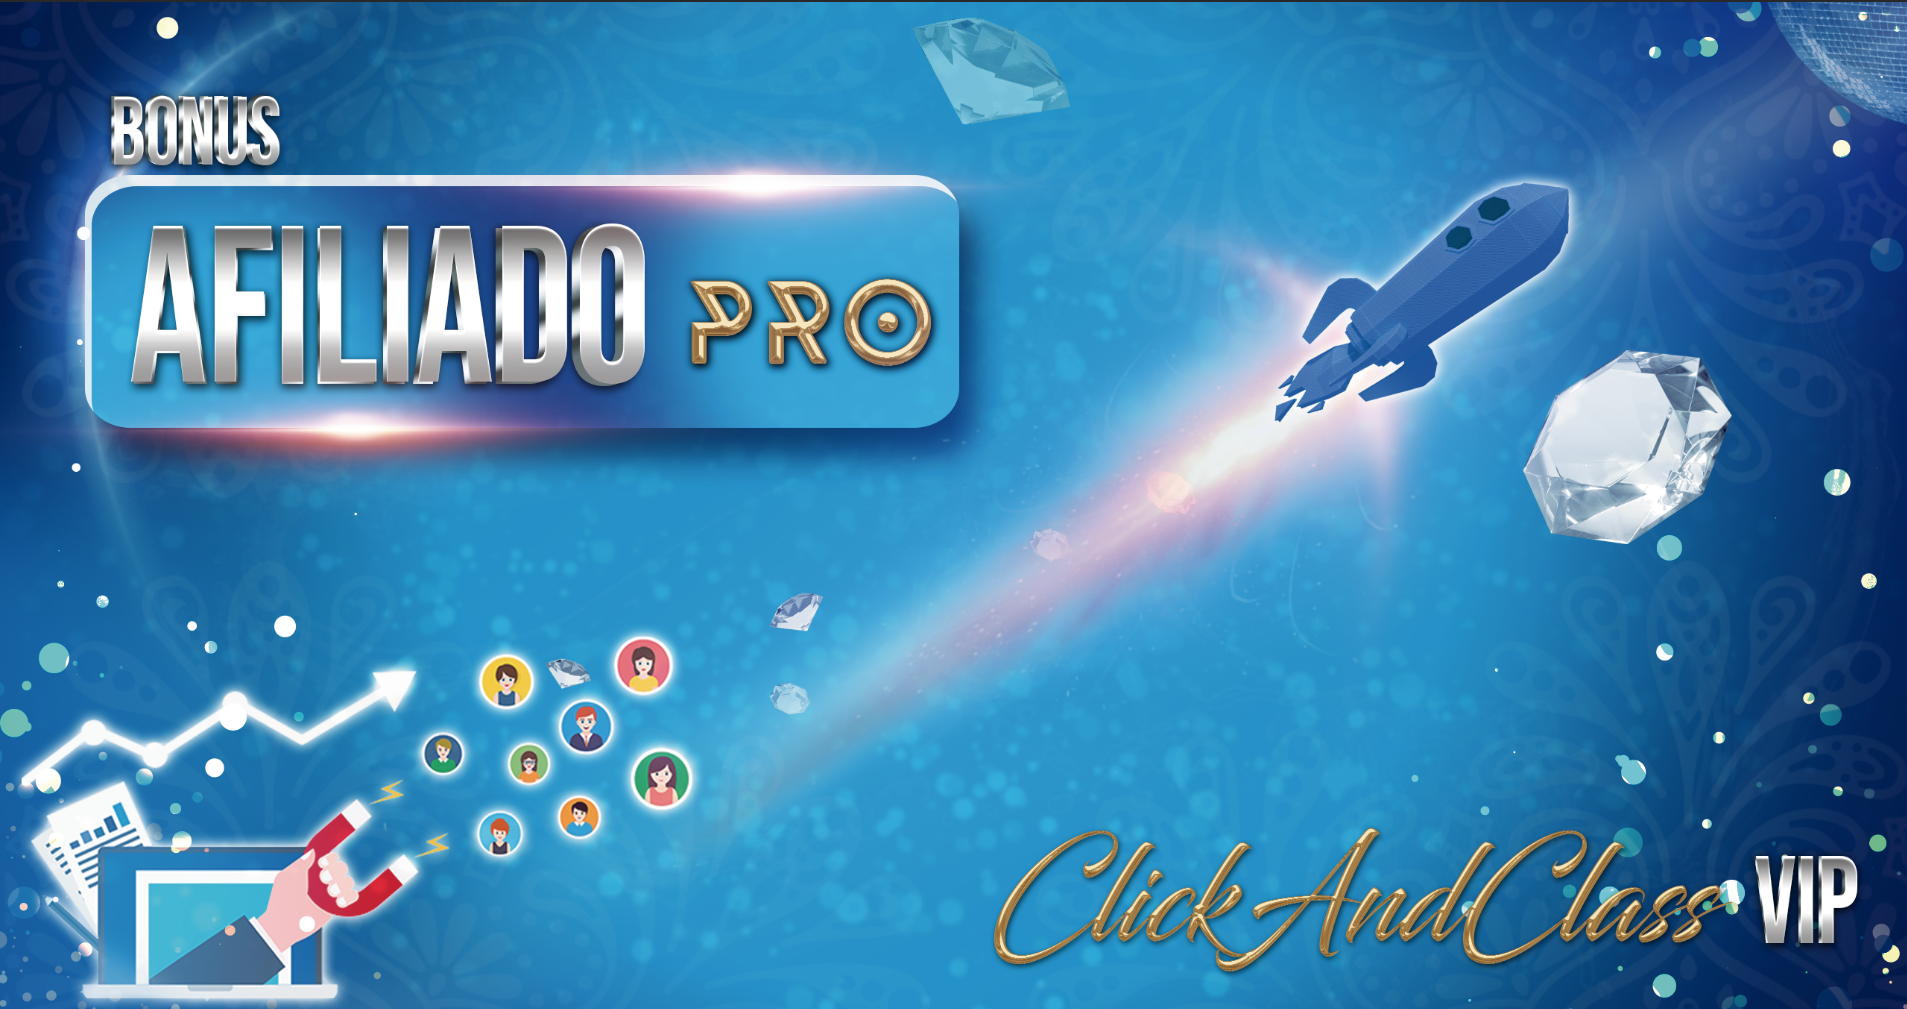 Afiliado Pro Bonus ClickAndClass